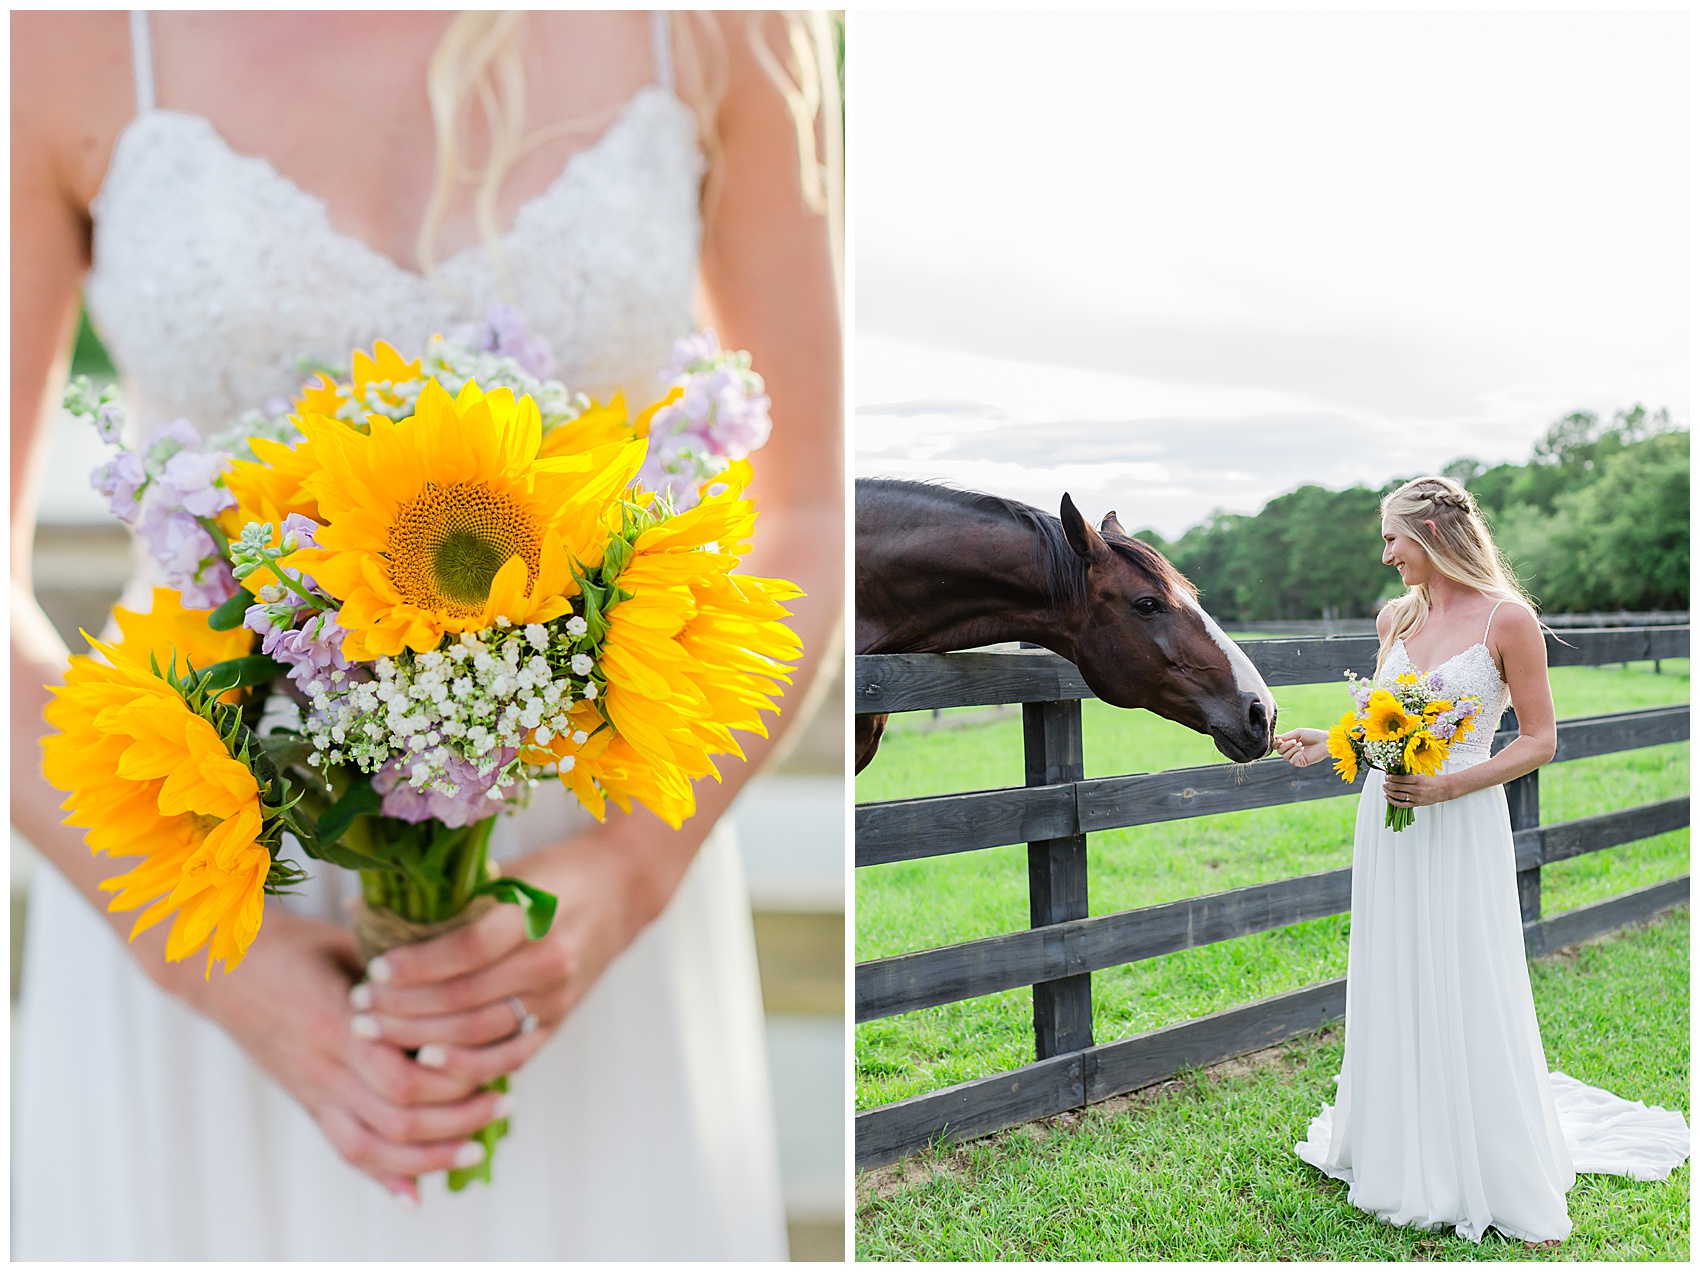 Horses at Pepper plantation bridal portraits - One Year Anniversary